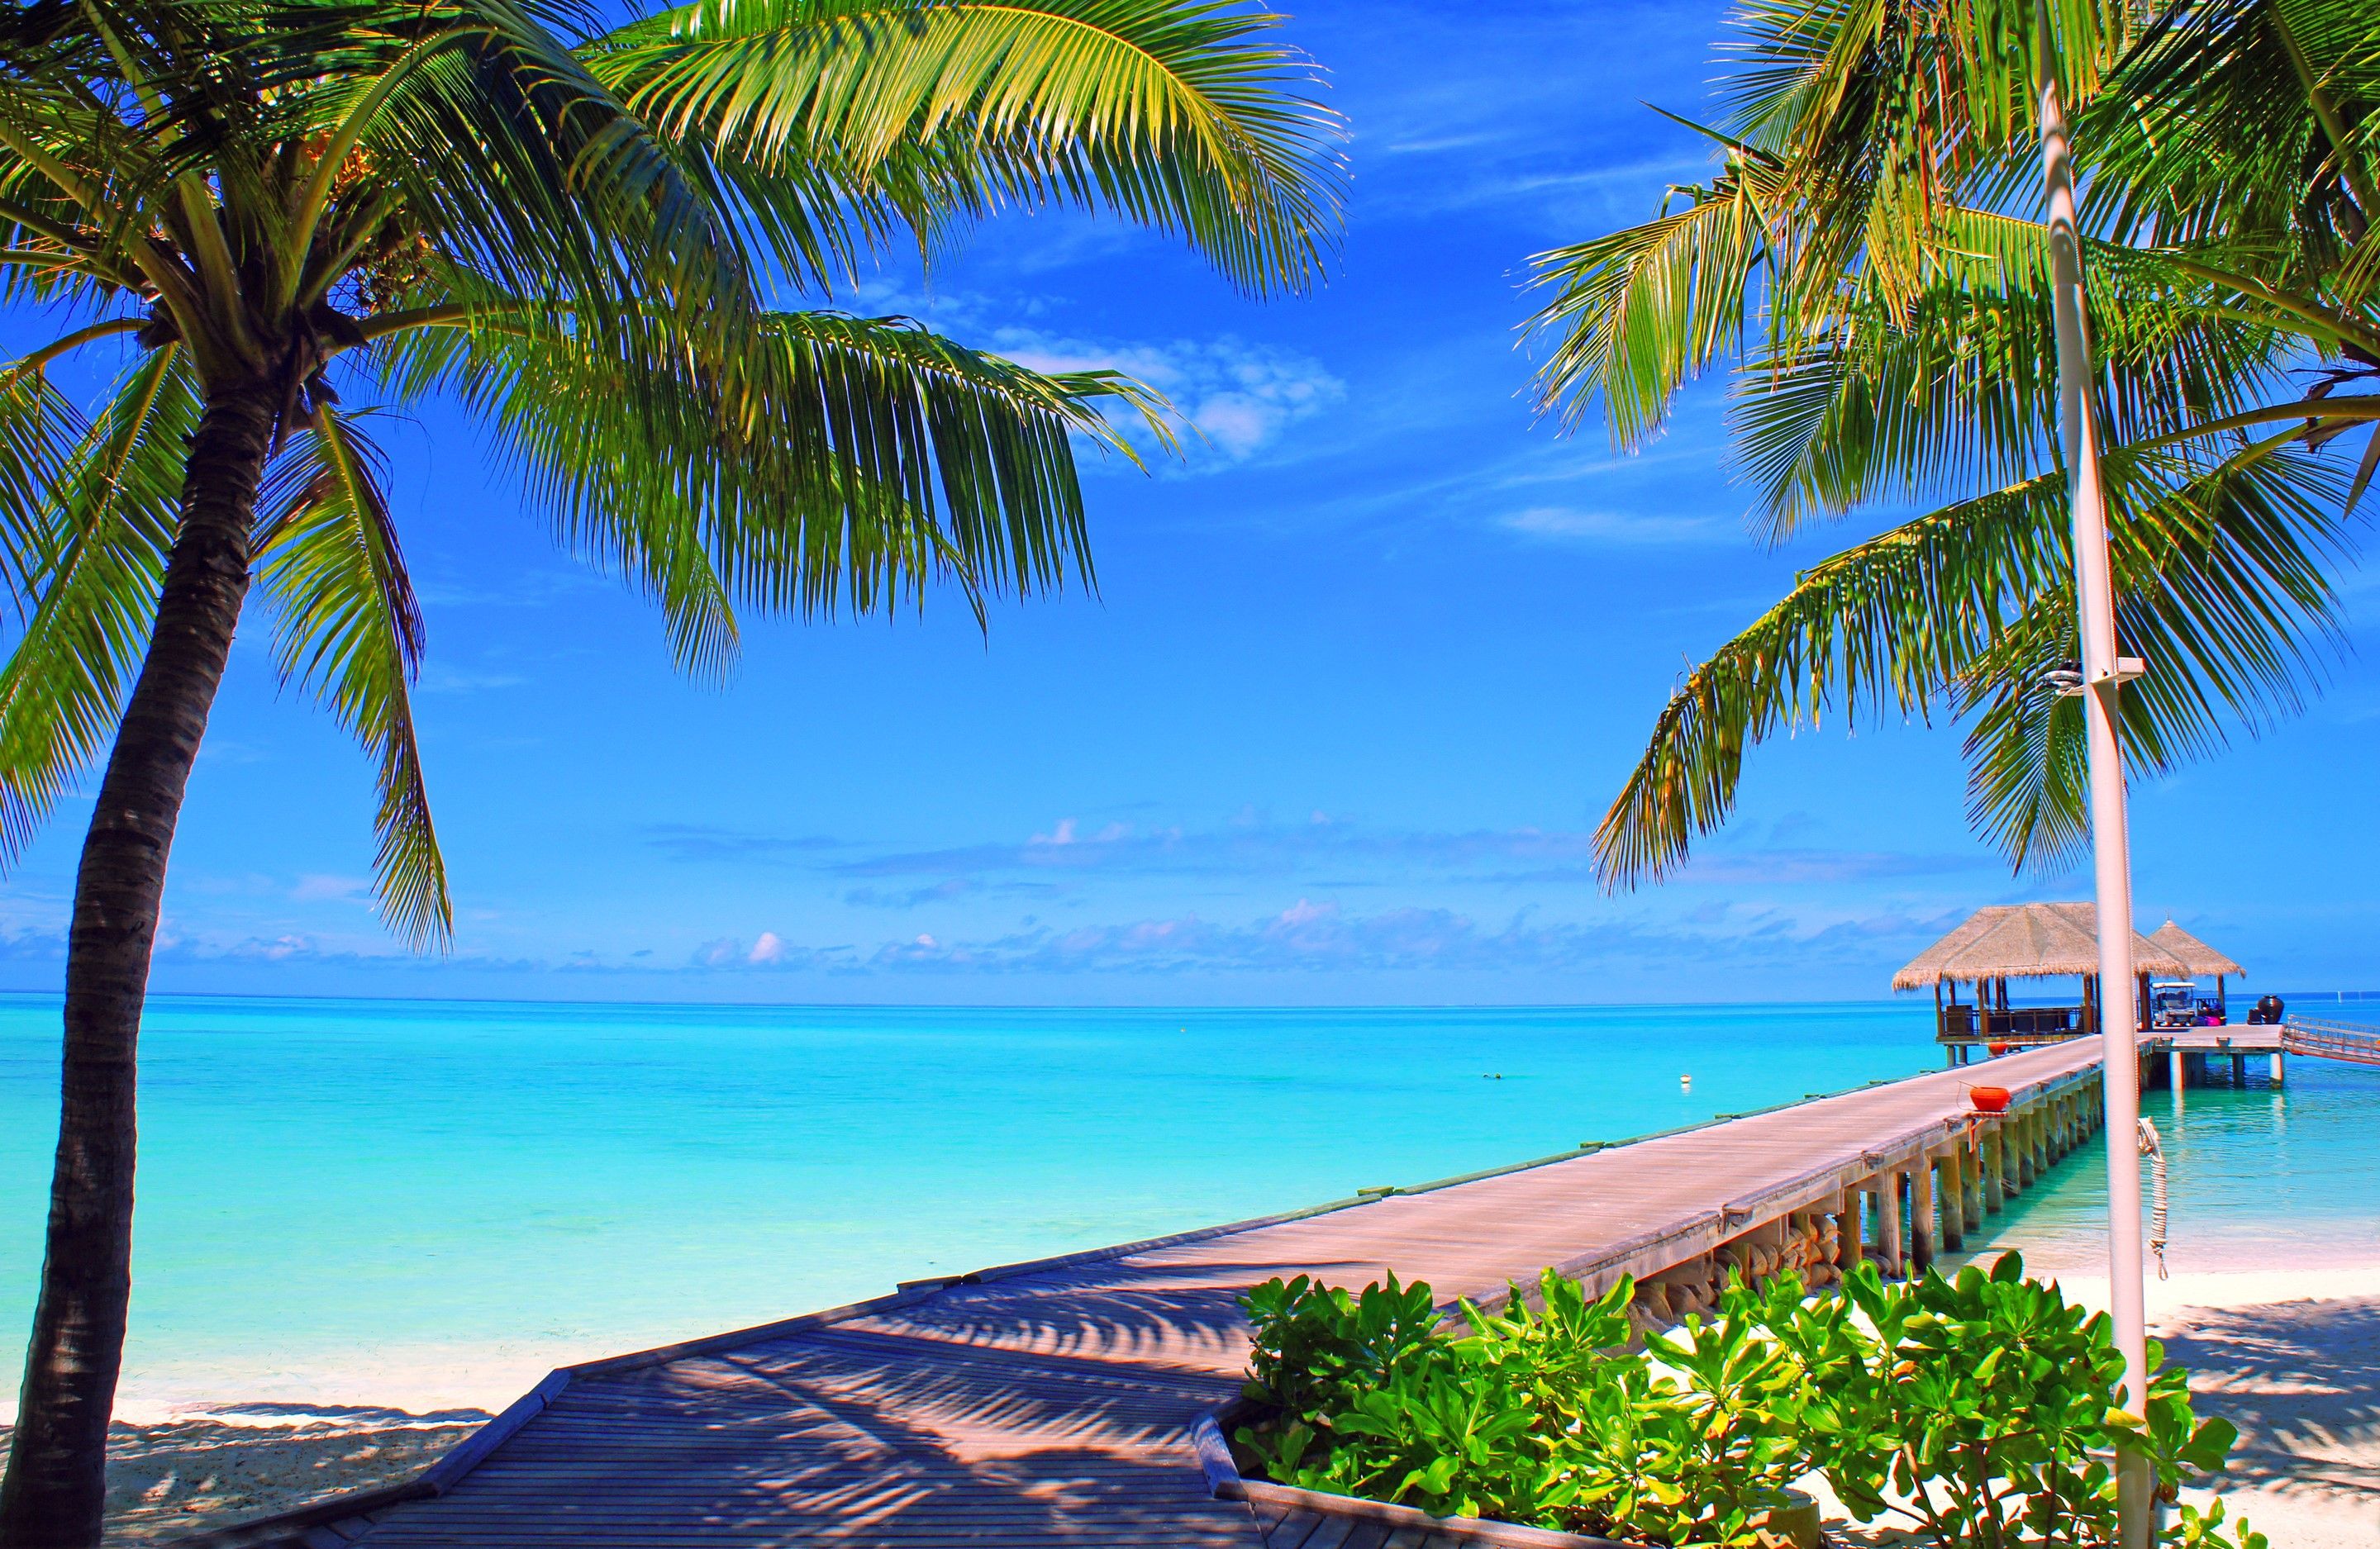 Maldives, Sky, Clouds, Island, Palm trees, Bungalows, Sea, Ocean